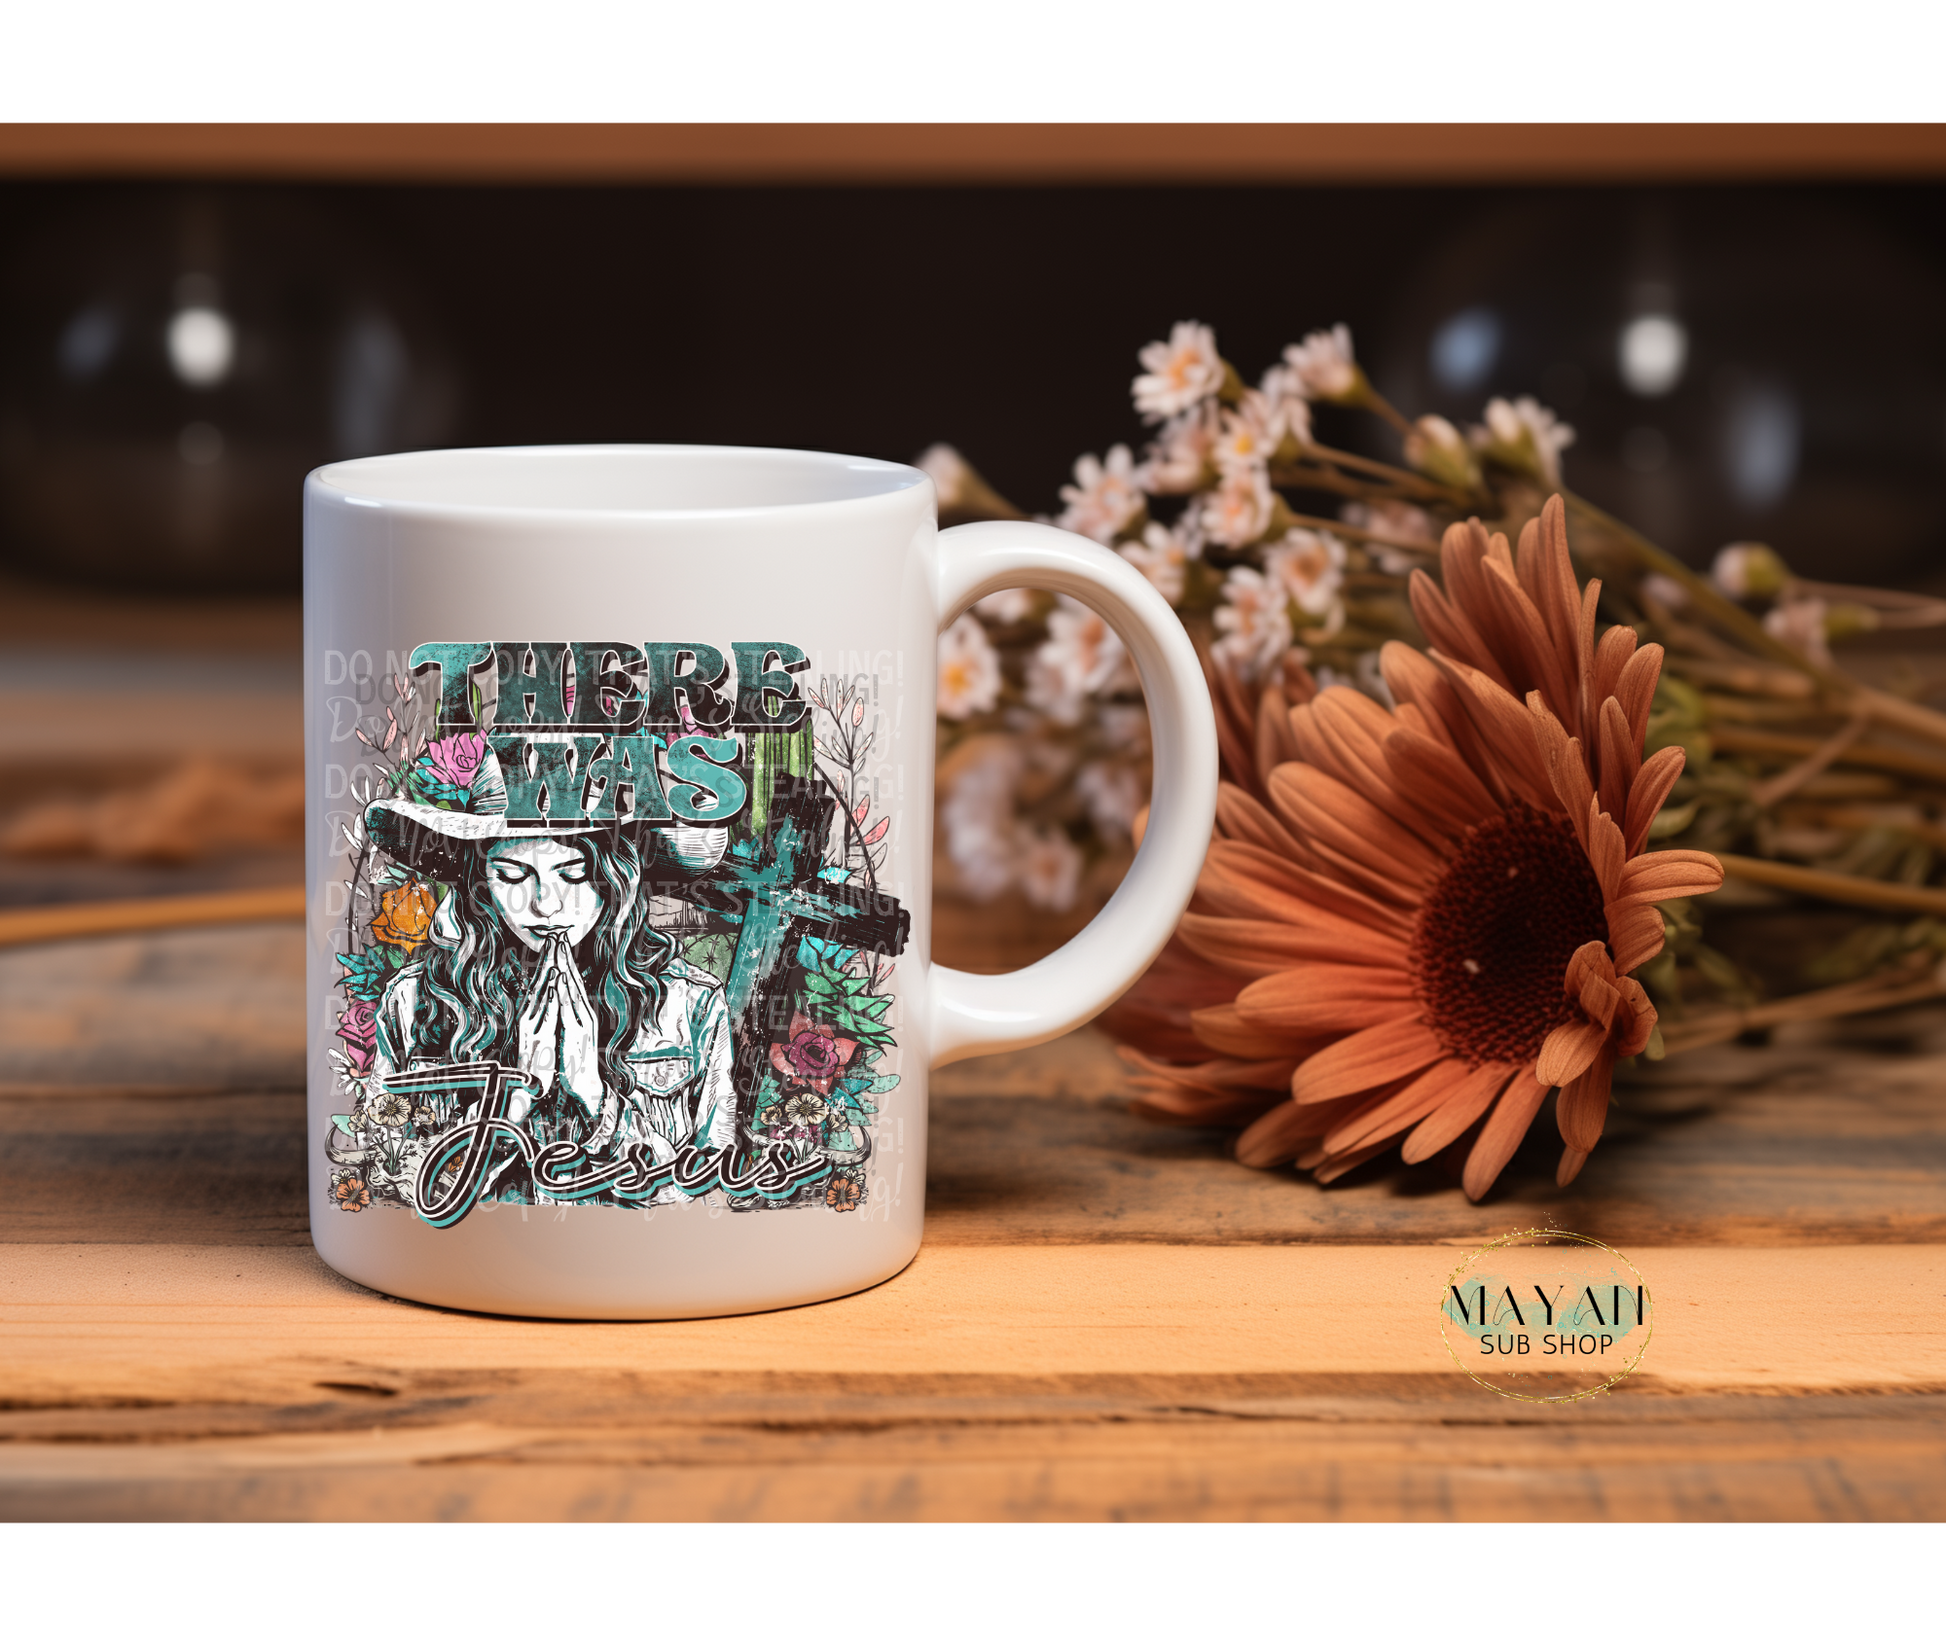 There was Jesus 15 oz. coffee mug. -Mayan Sub Shop